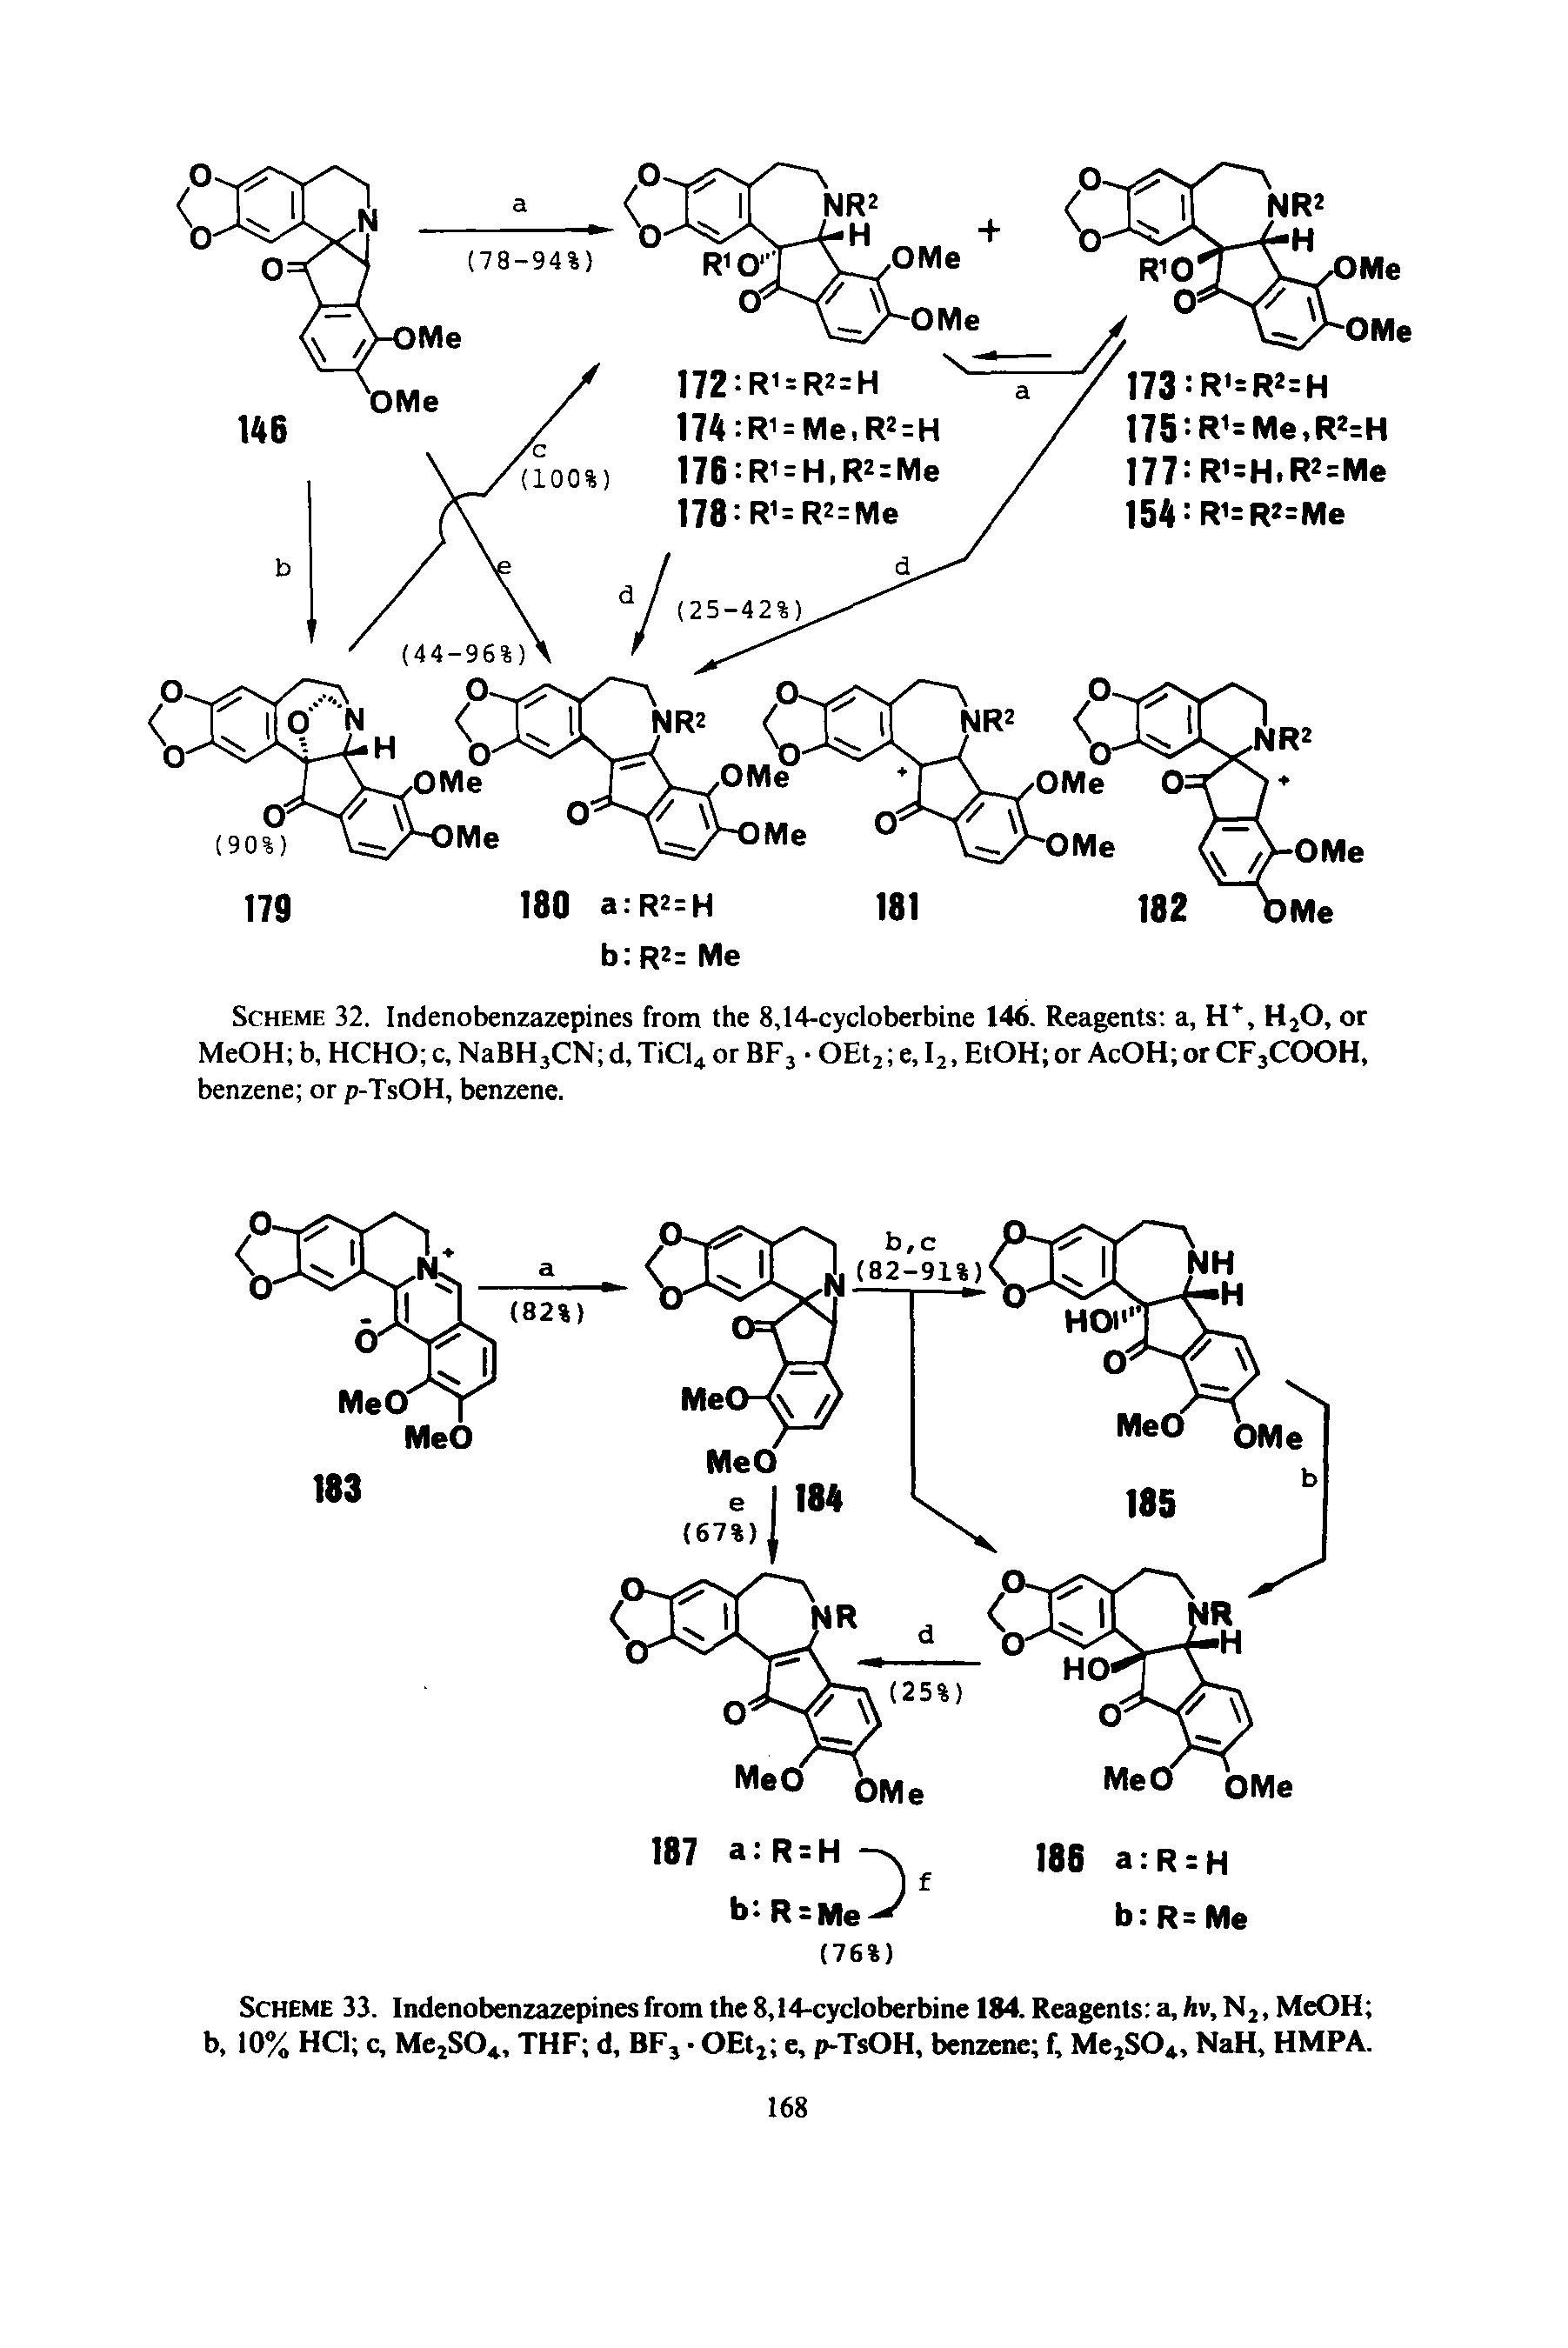 Scheme 33. Indenobenzazepines from the 8,14-cycloberbine 184. Reagents a, hv, N2, MeOH b, 10% HC1 c, Me2S04, THF d, BF3 OEt2 e, p-TsOH, benzene f, Me2SOt, NaH, HMPA.